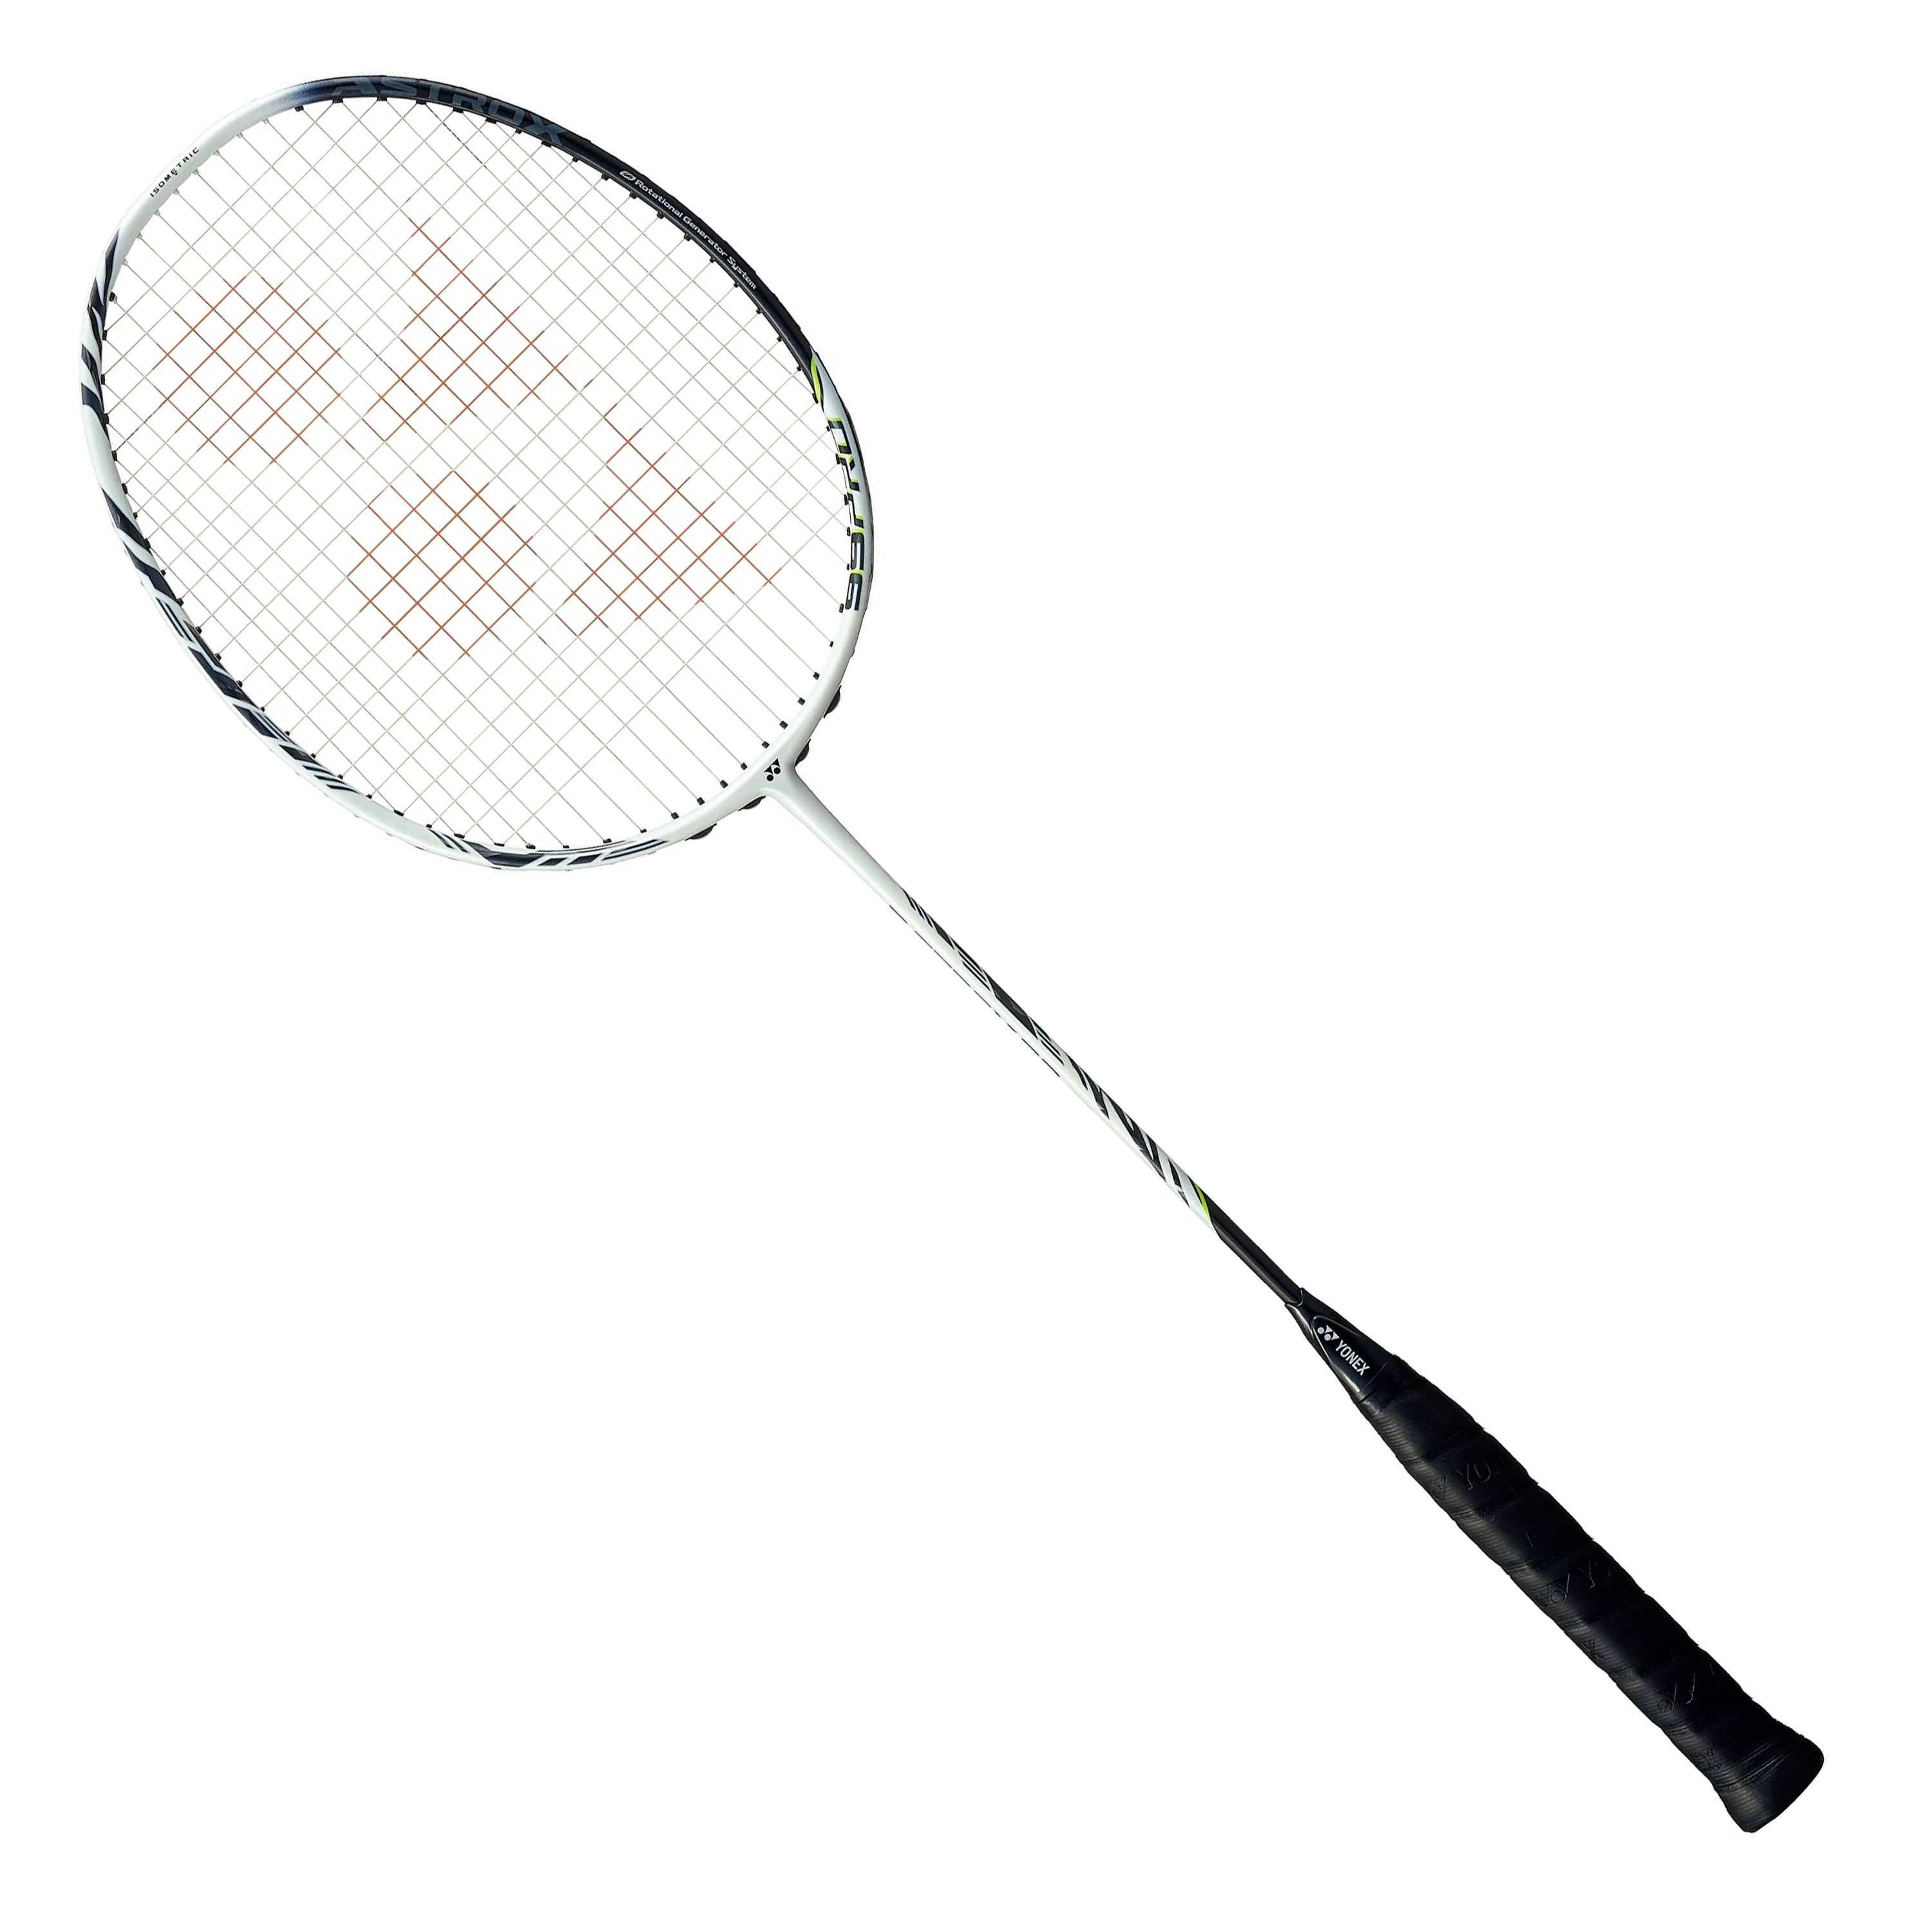 Yonex Astrox 99 Pro Badminton Racquet White Tiger 3U(88g)G5